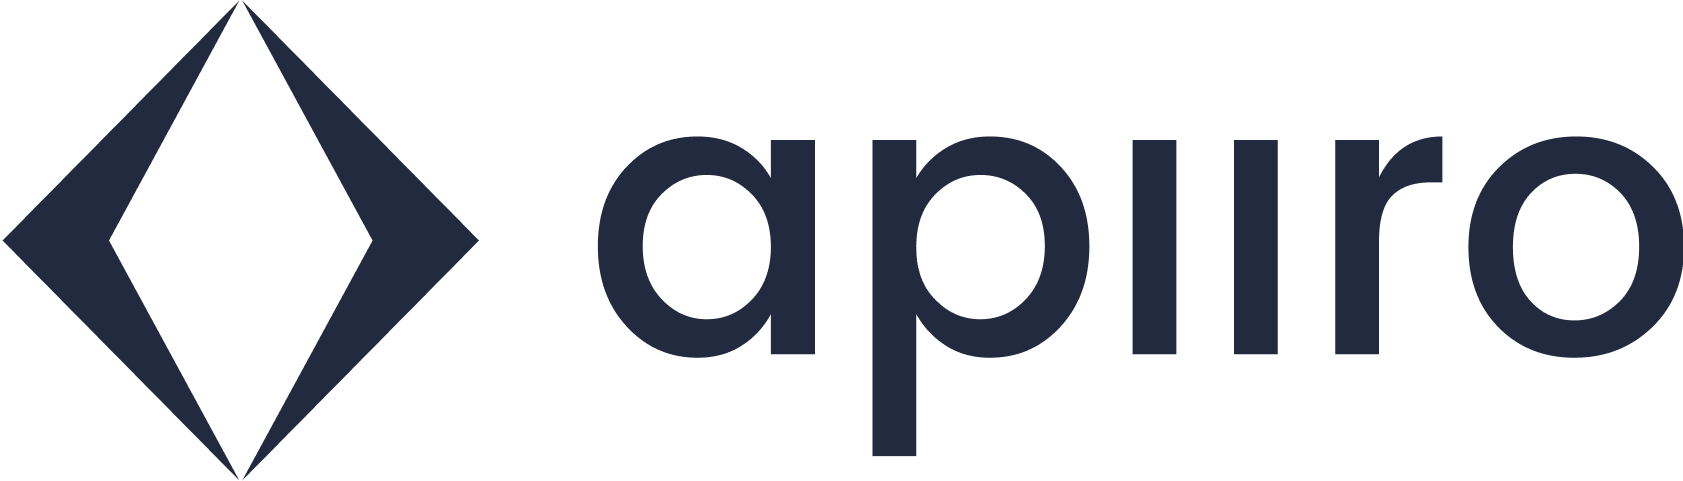 Apiiro logo black large